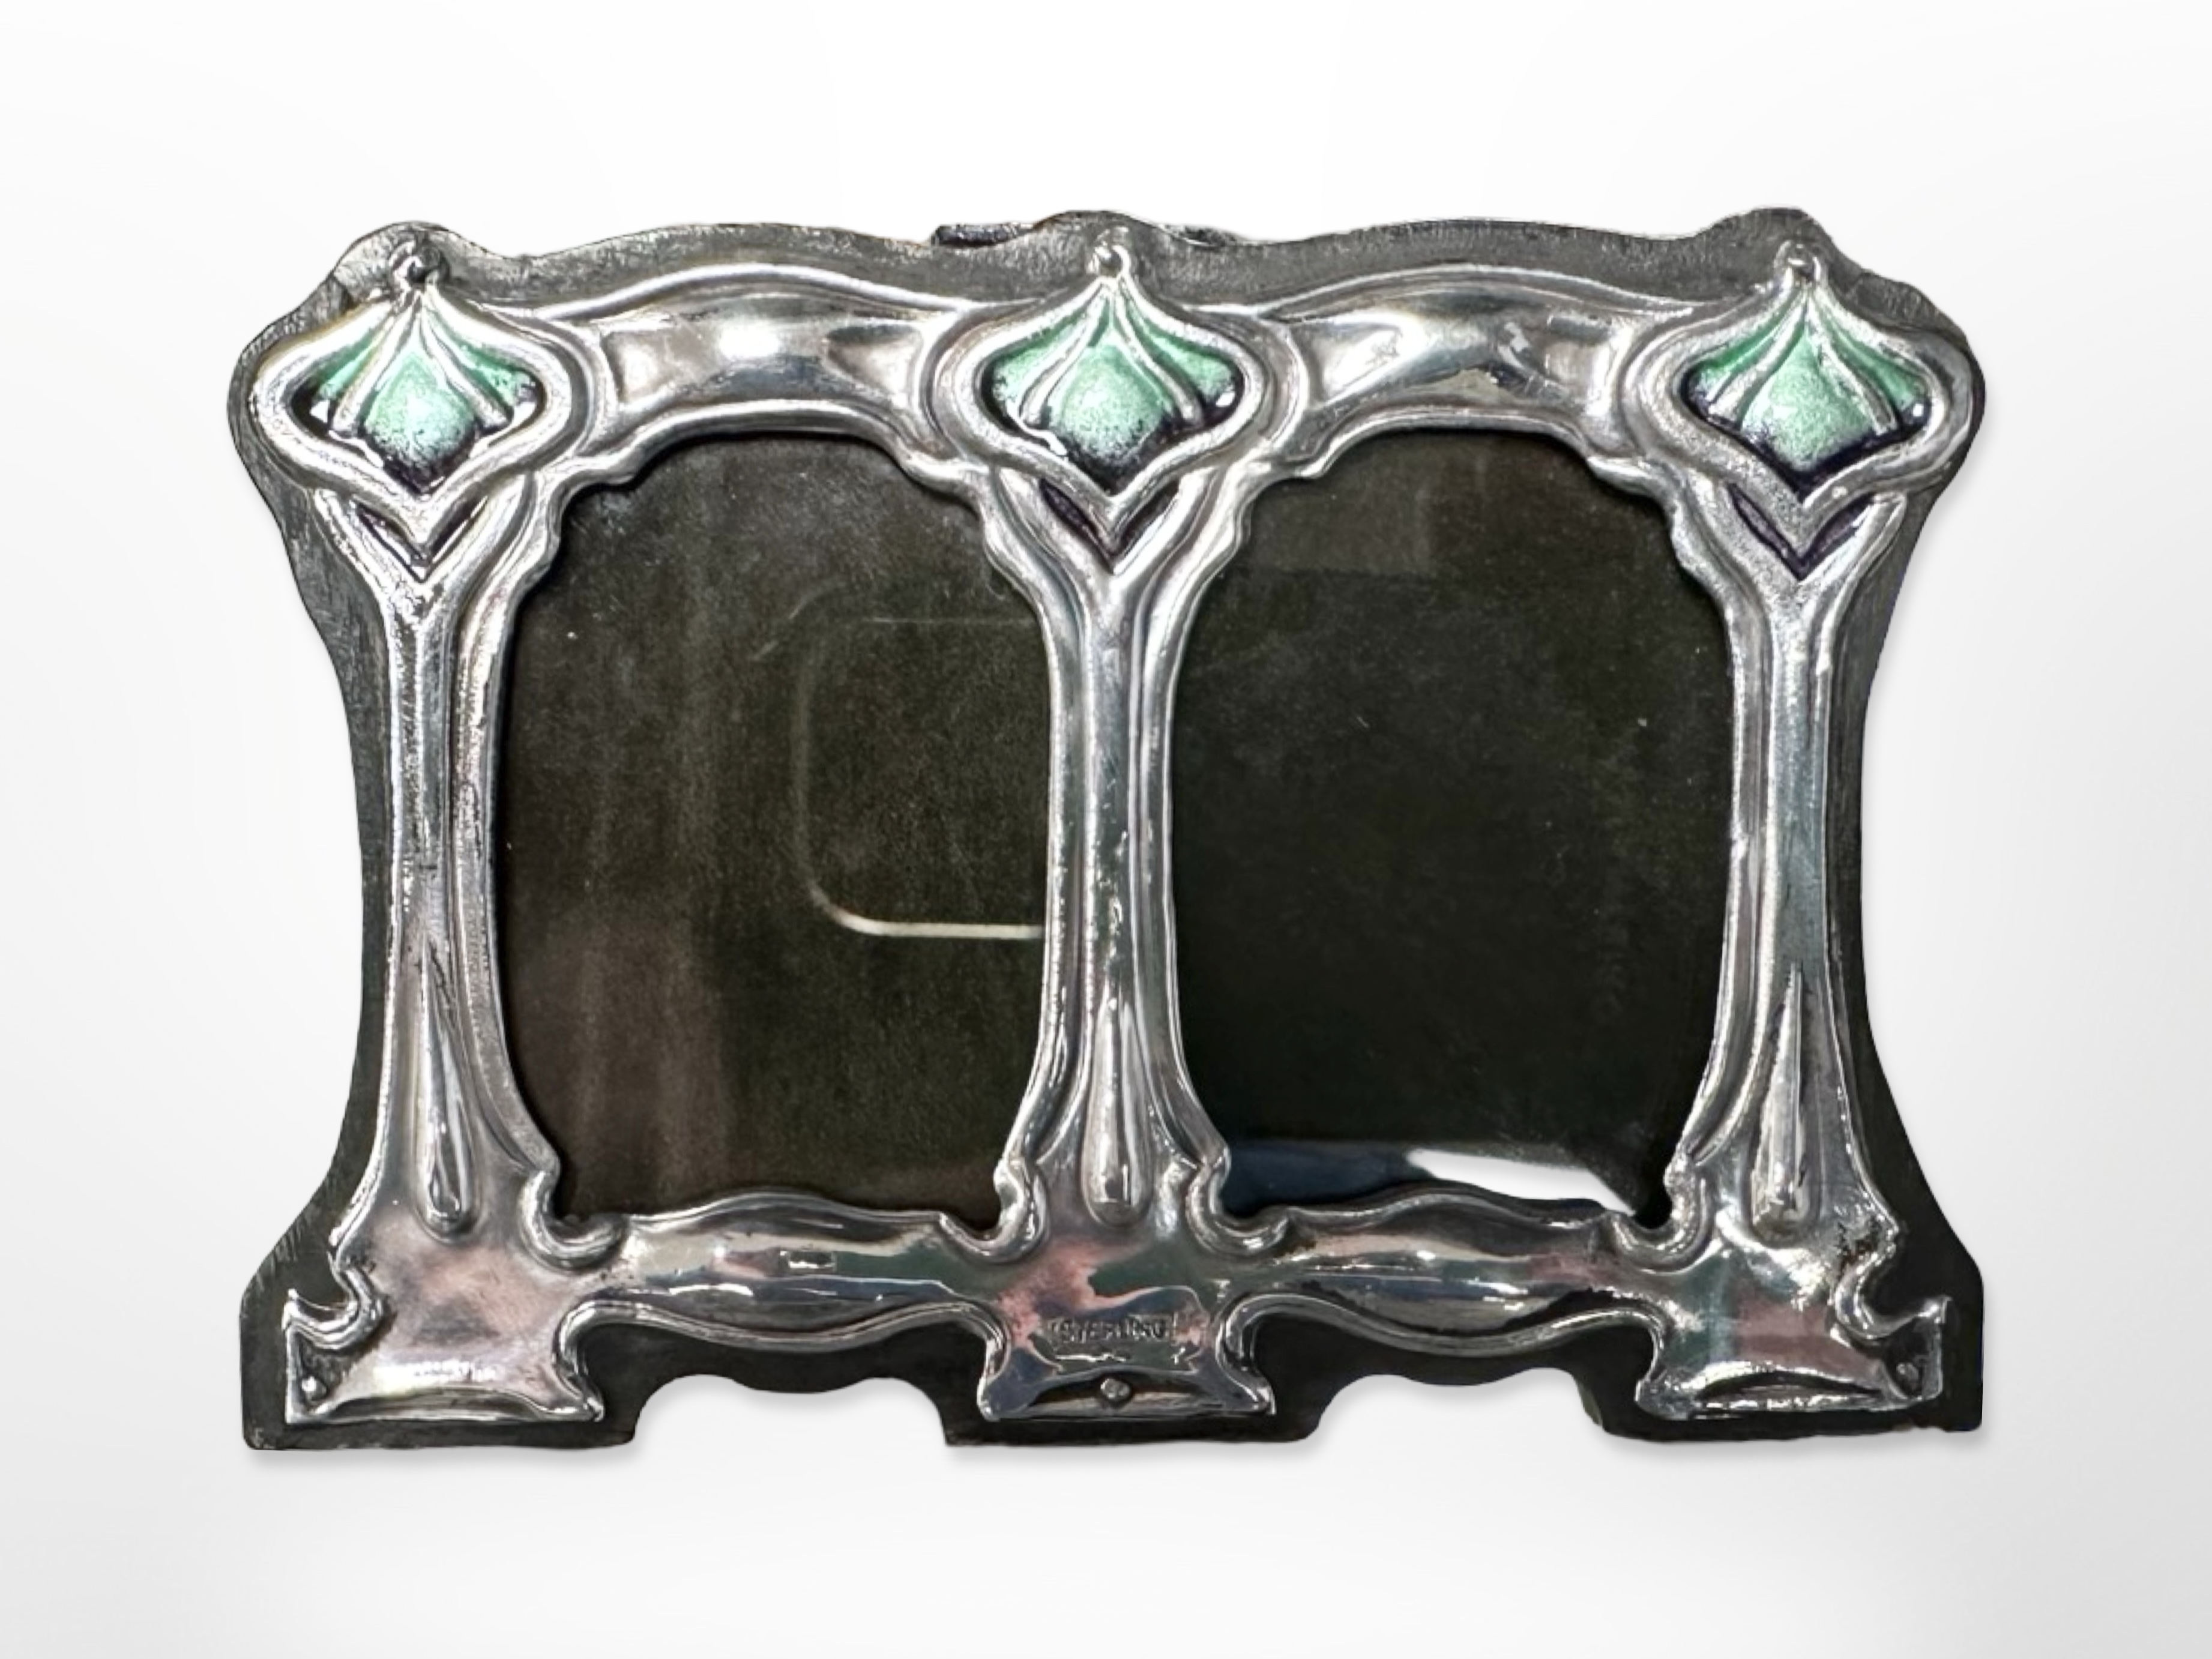 An Art Nouveau style Sterling silver mounted photograph frame, 11.5 cm x 8 cm.